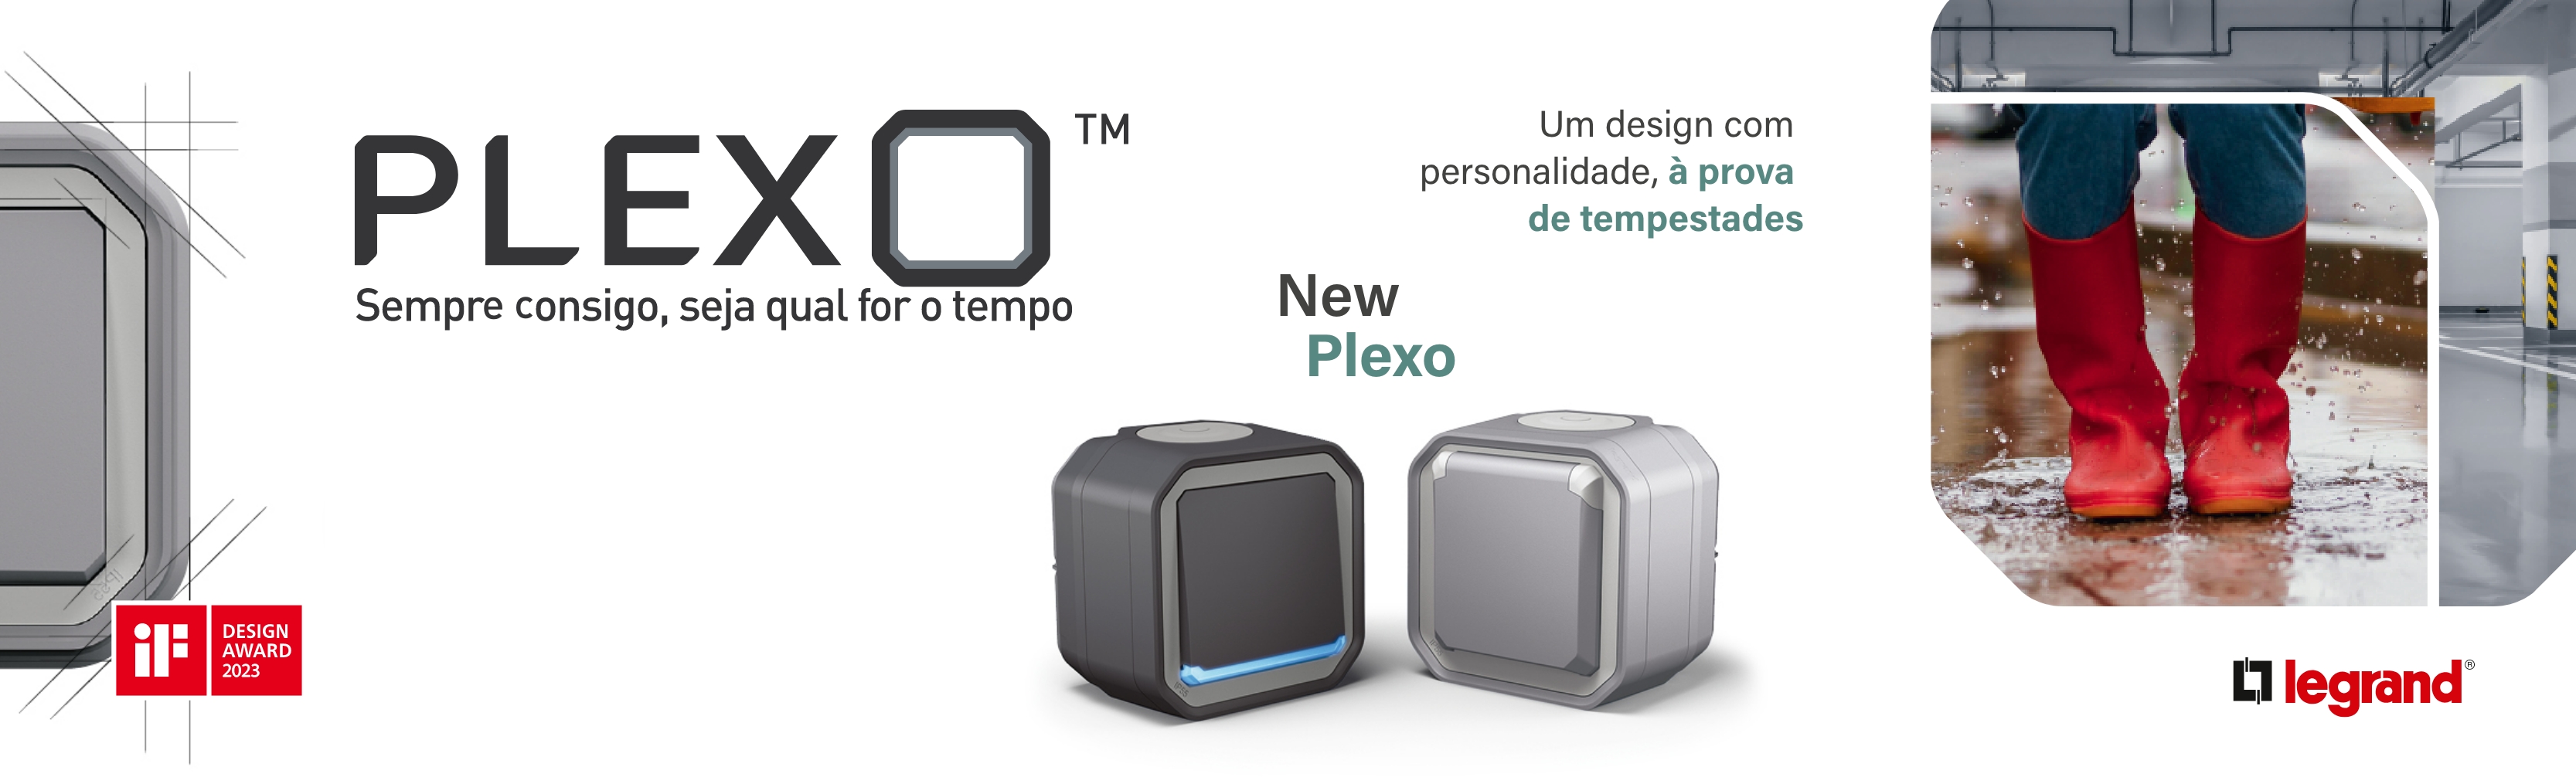 New Plexo